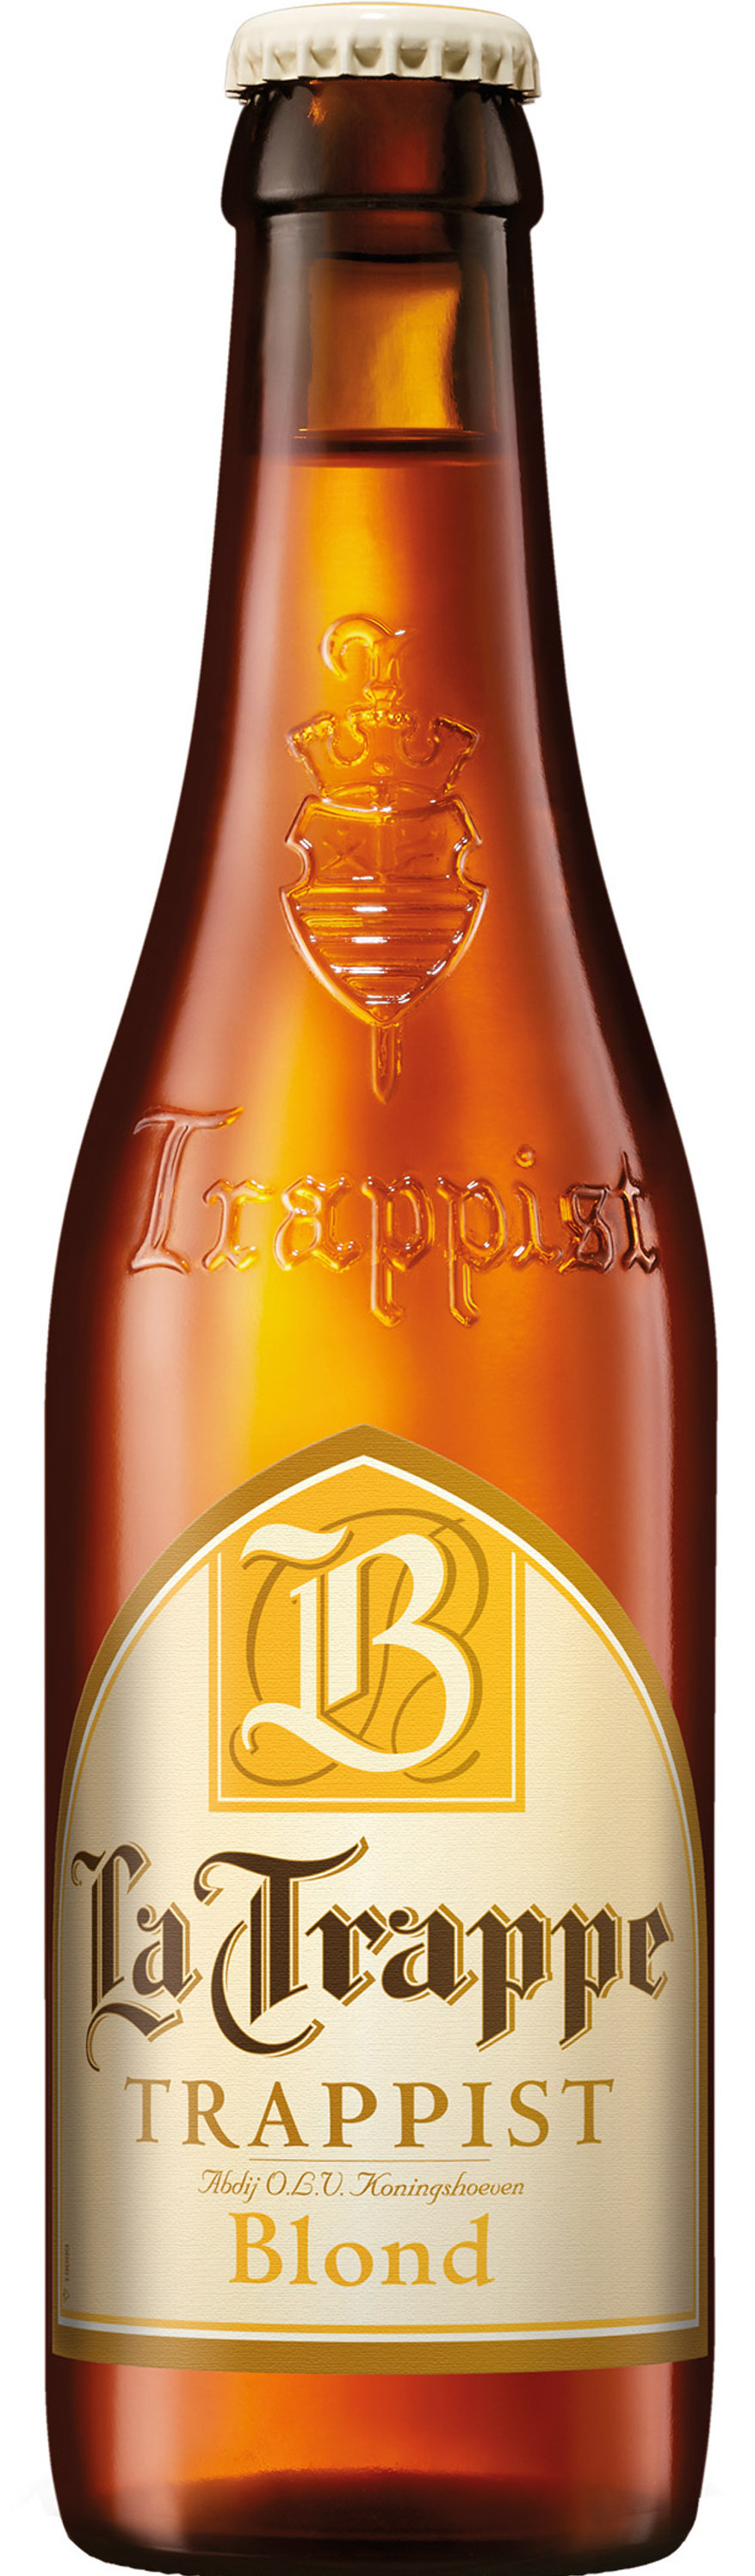 La Trappe Blond Trappistenbier 0,33L MEHRWEG